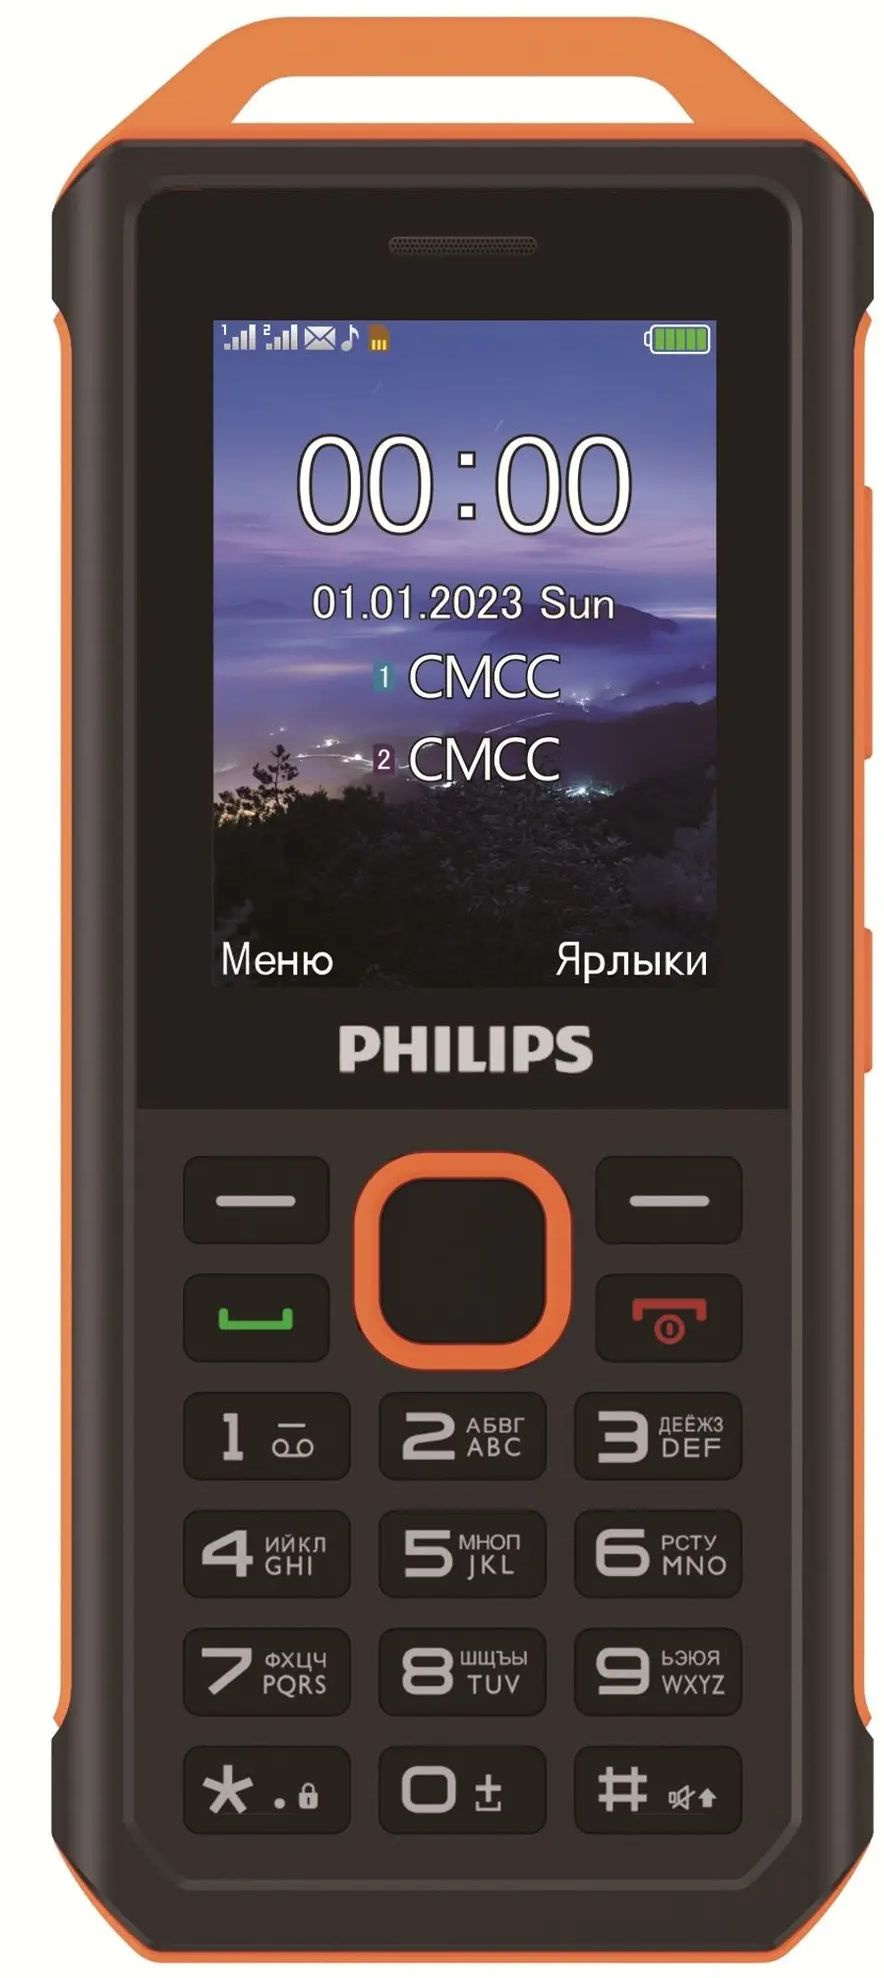 Мобильный телефон Philips E2317 Xenium желтый моноблок 2Sim 2.4" 240x320 Nucleus 0.3Mpix GSM900/1800 MP3 FM microSDHC max32Gb